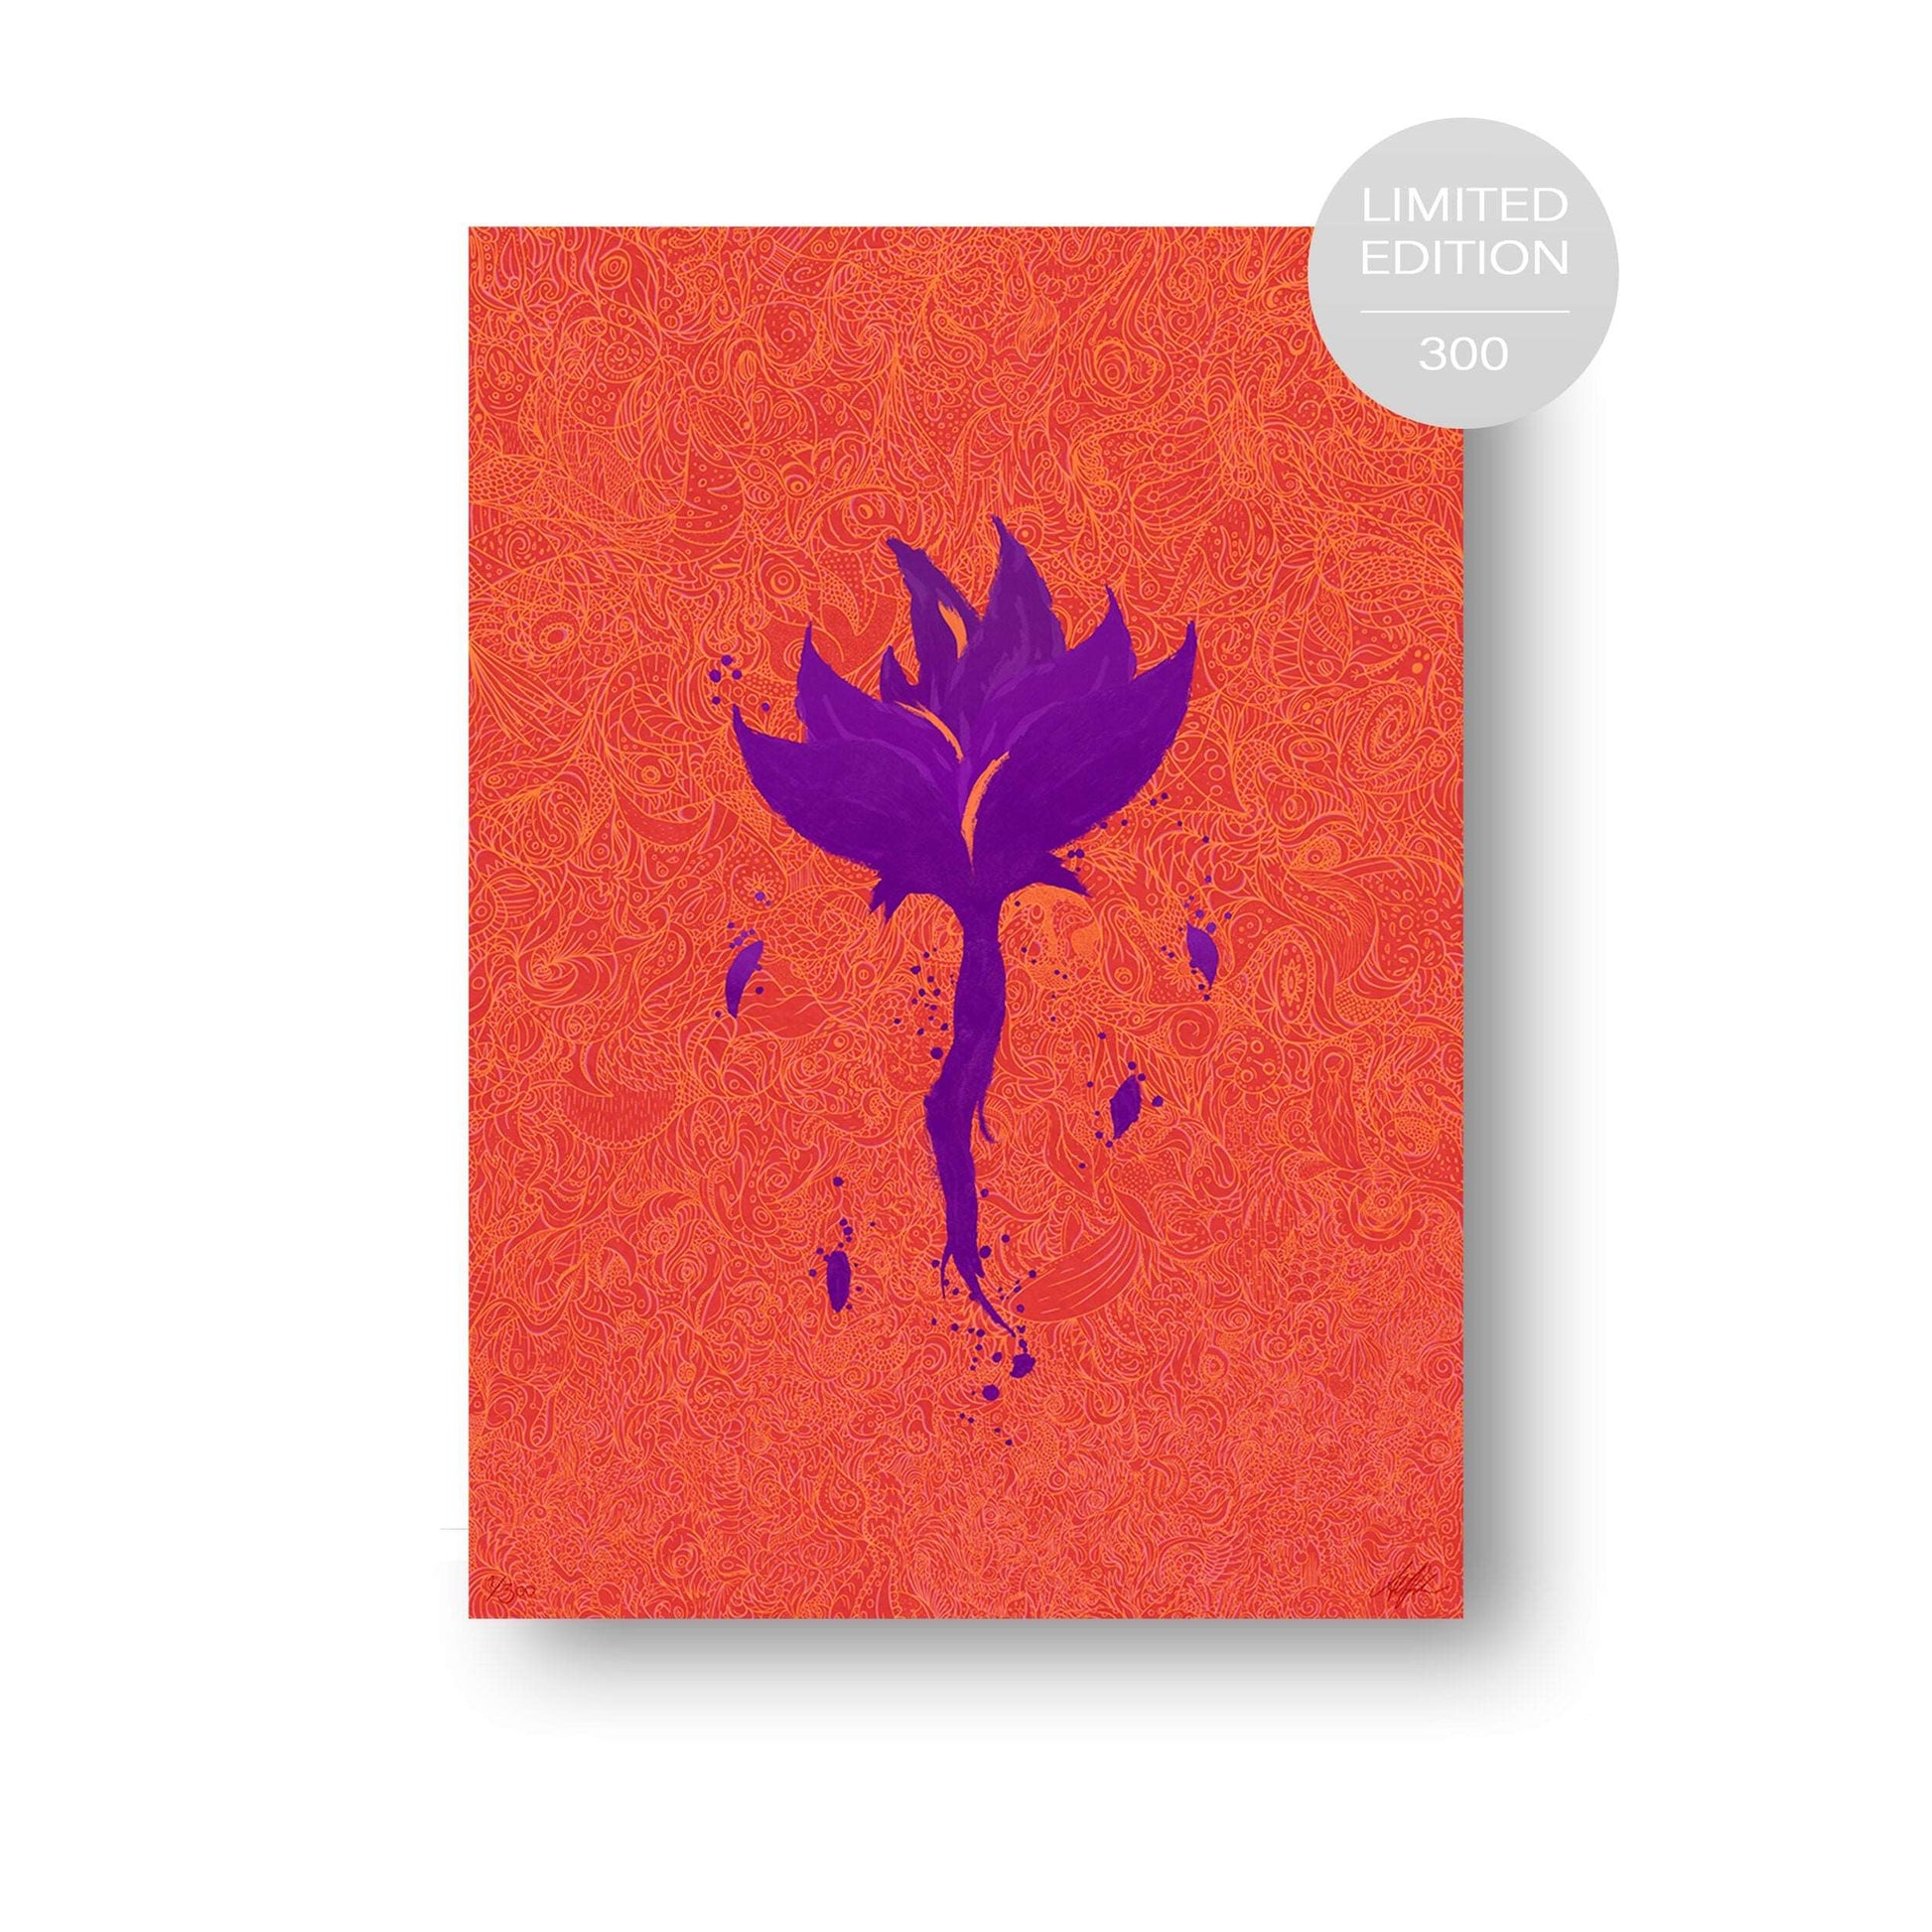 NOKUKO - art - Alan Pedersen - ALANTHEROCK - Devotion - listen to you - limited edition 300 - Red Passion print